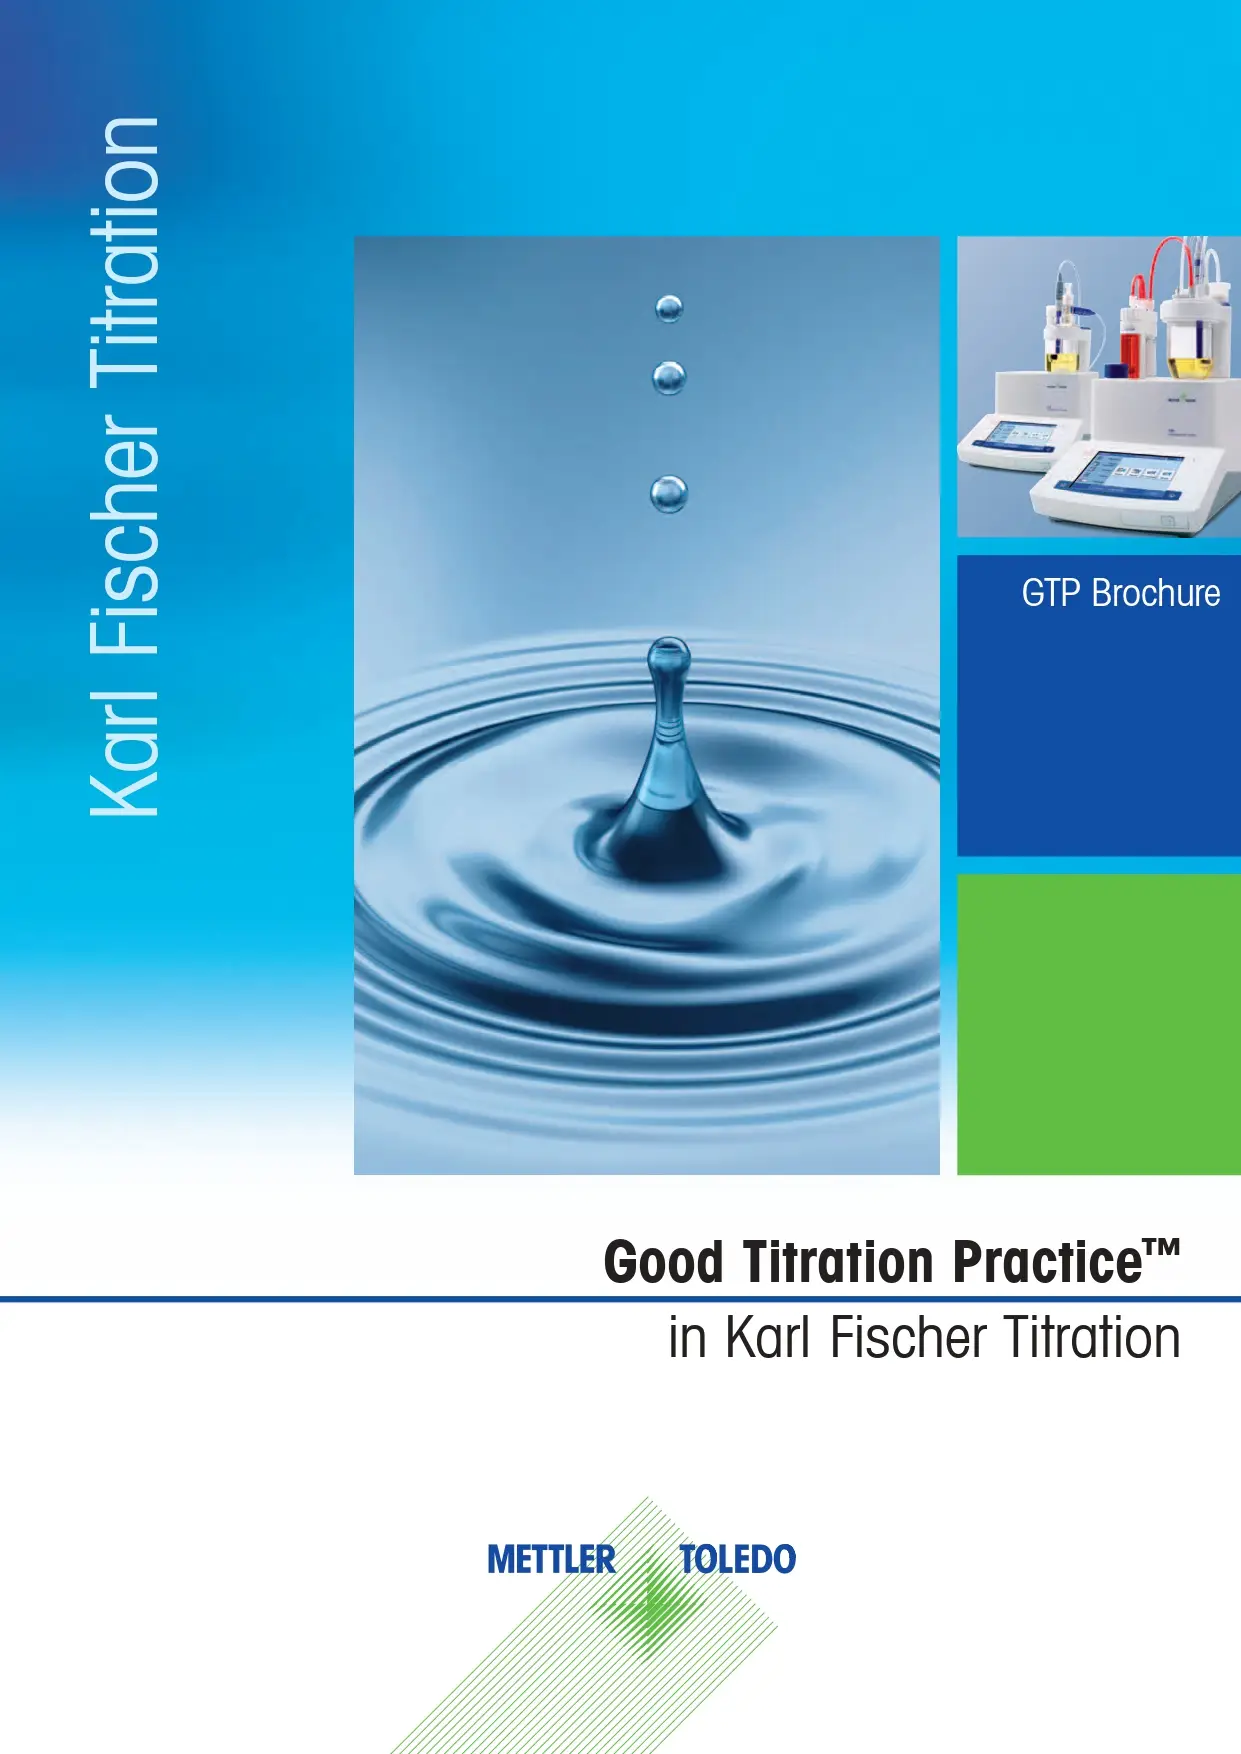 Good Titration Practice™ in Karl Fischer Titration